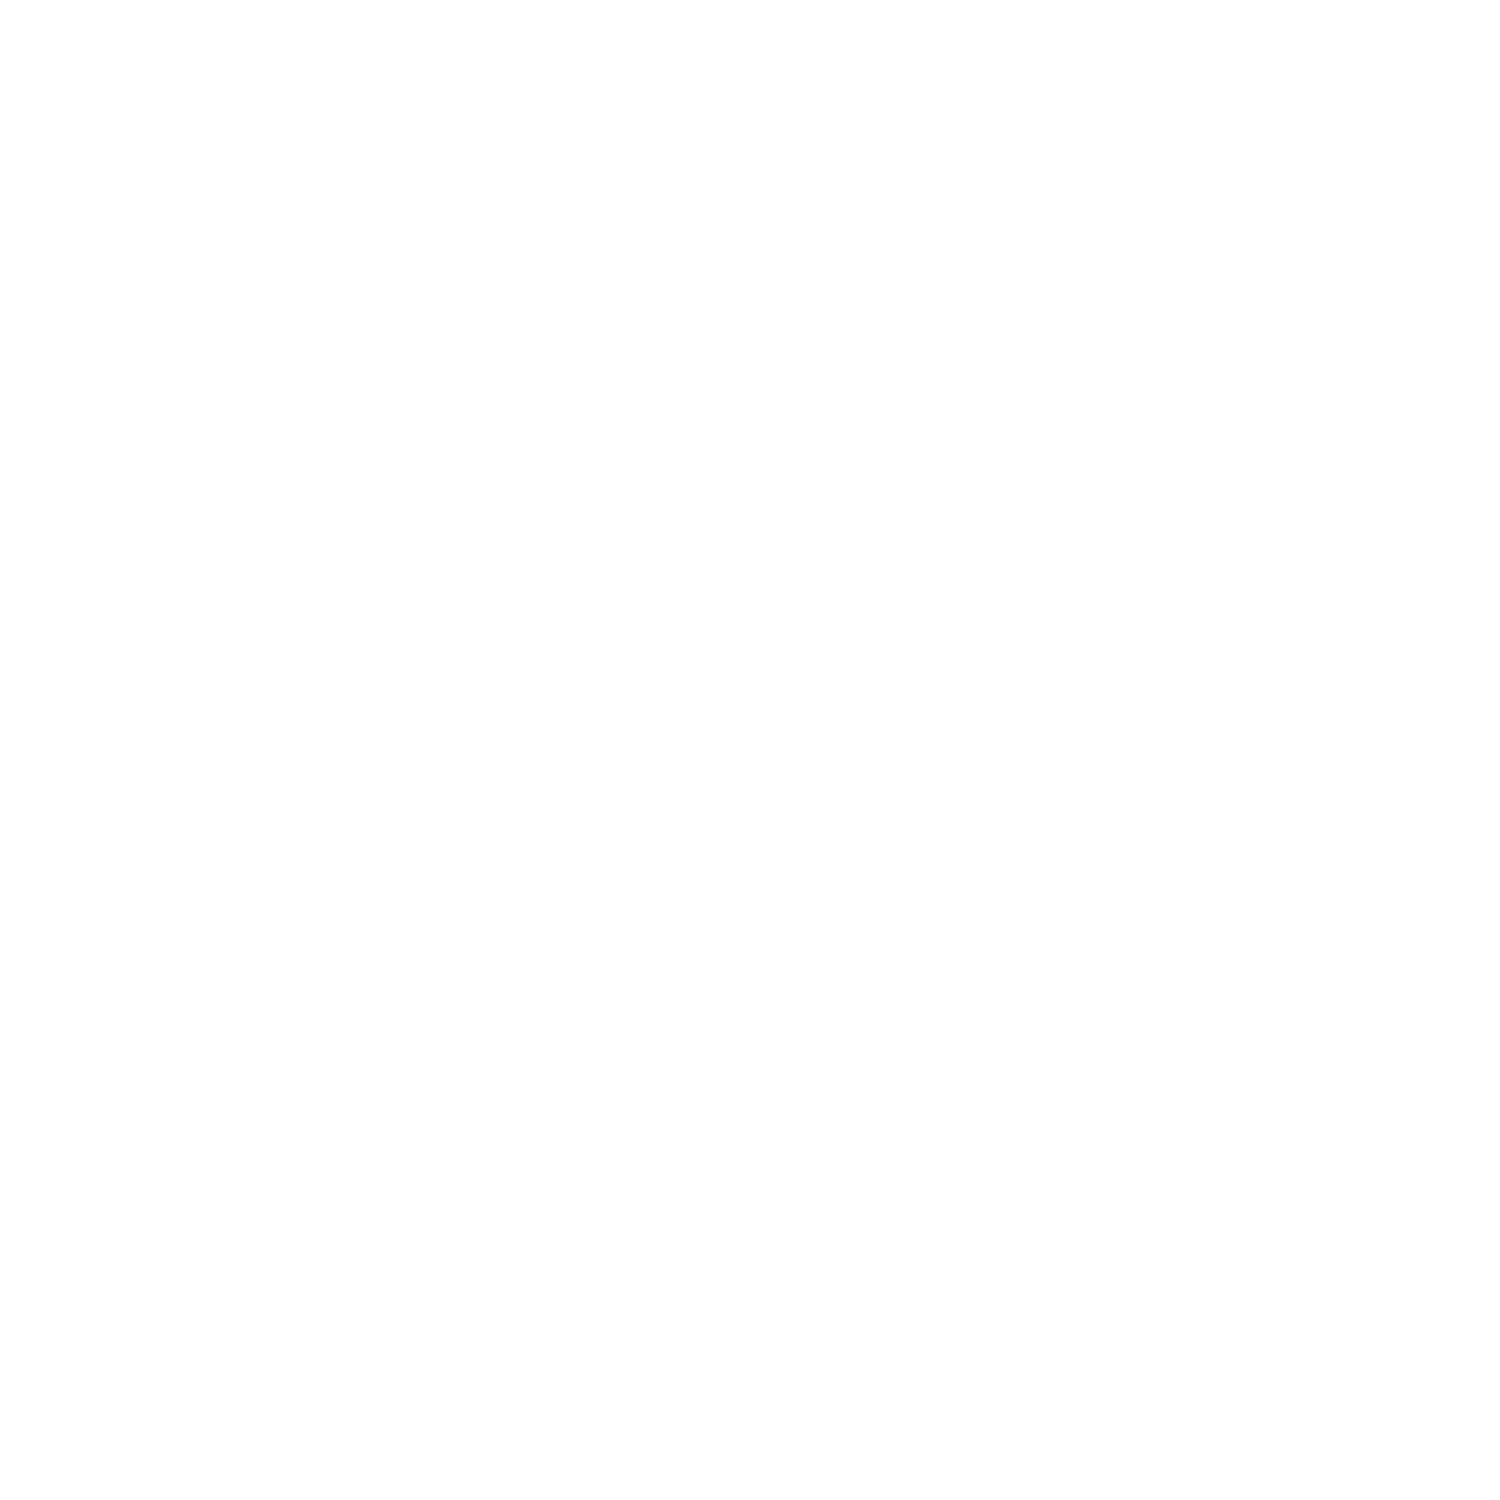 Taylor Duncan Photography